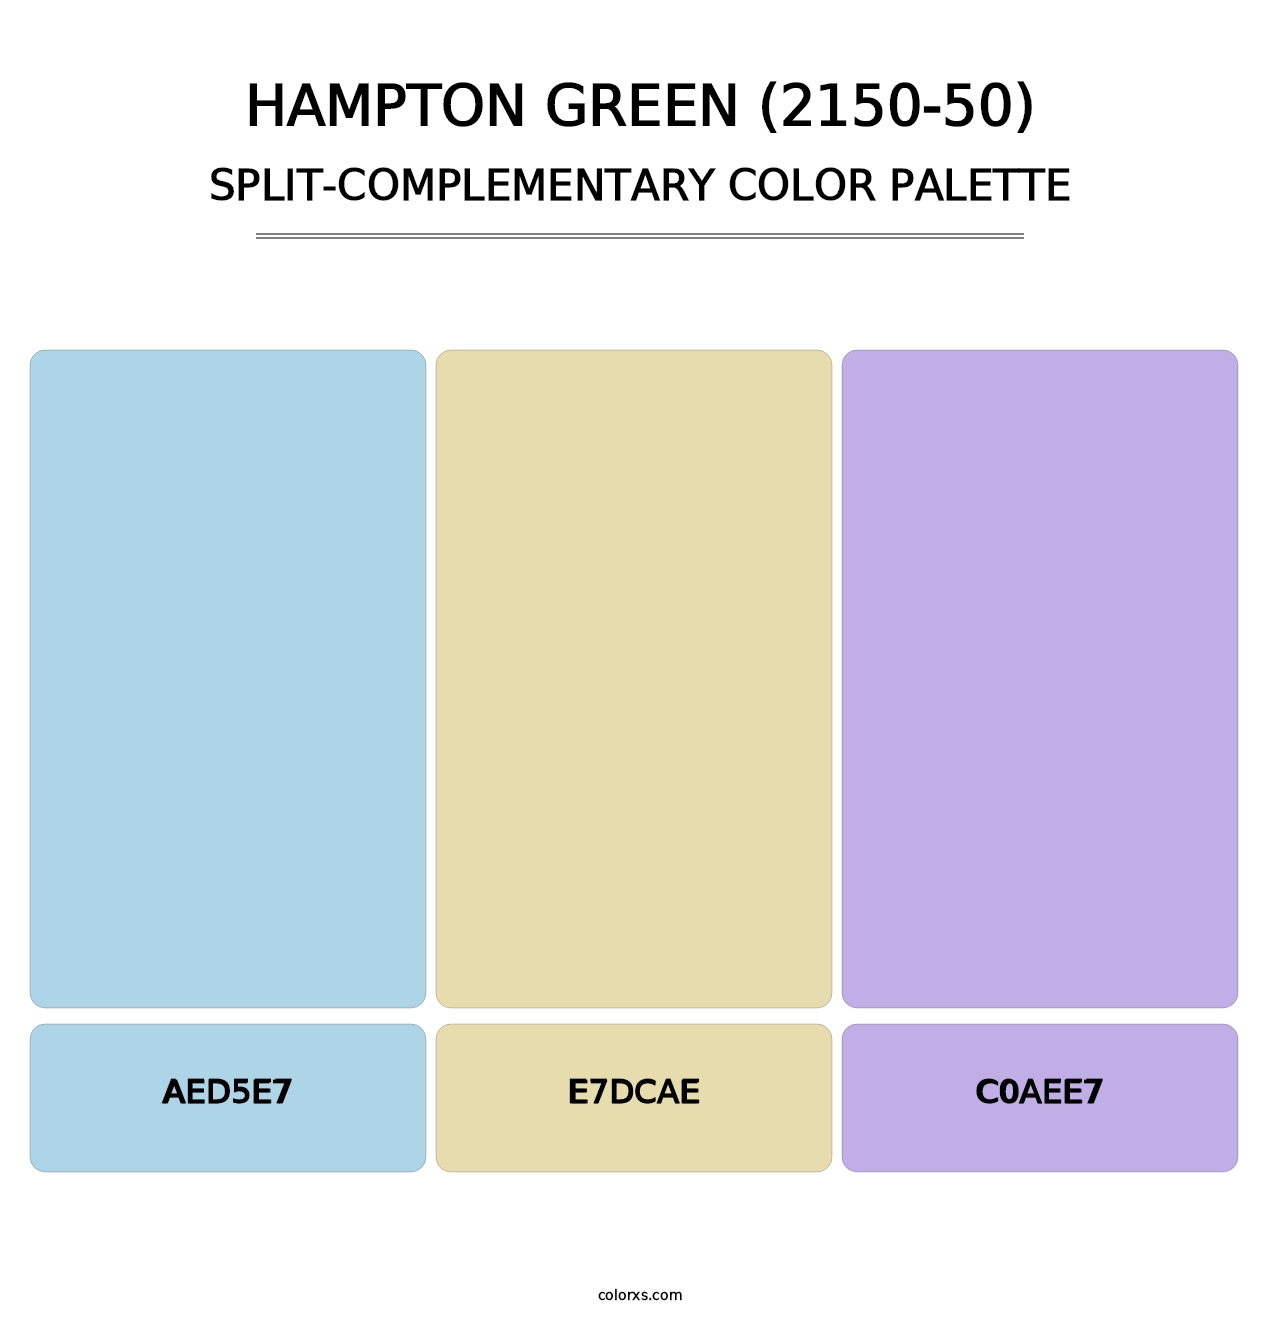 Hampton Green (2150-50) - Split-Complementary Color Palette